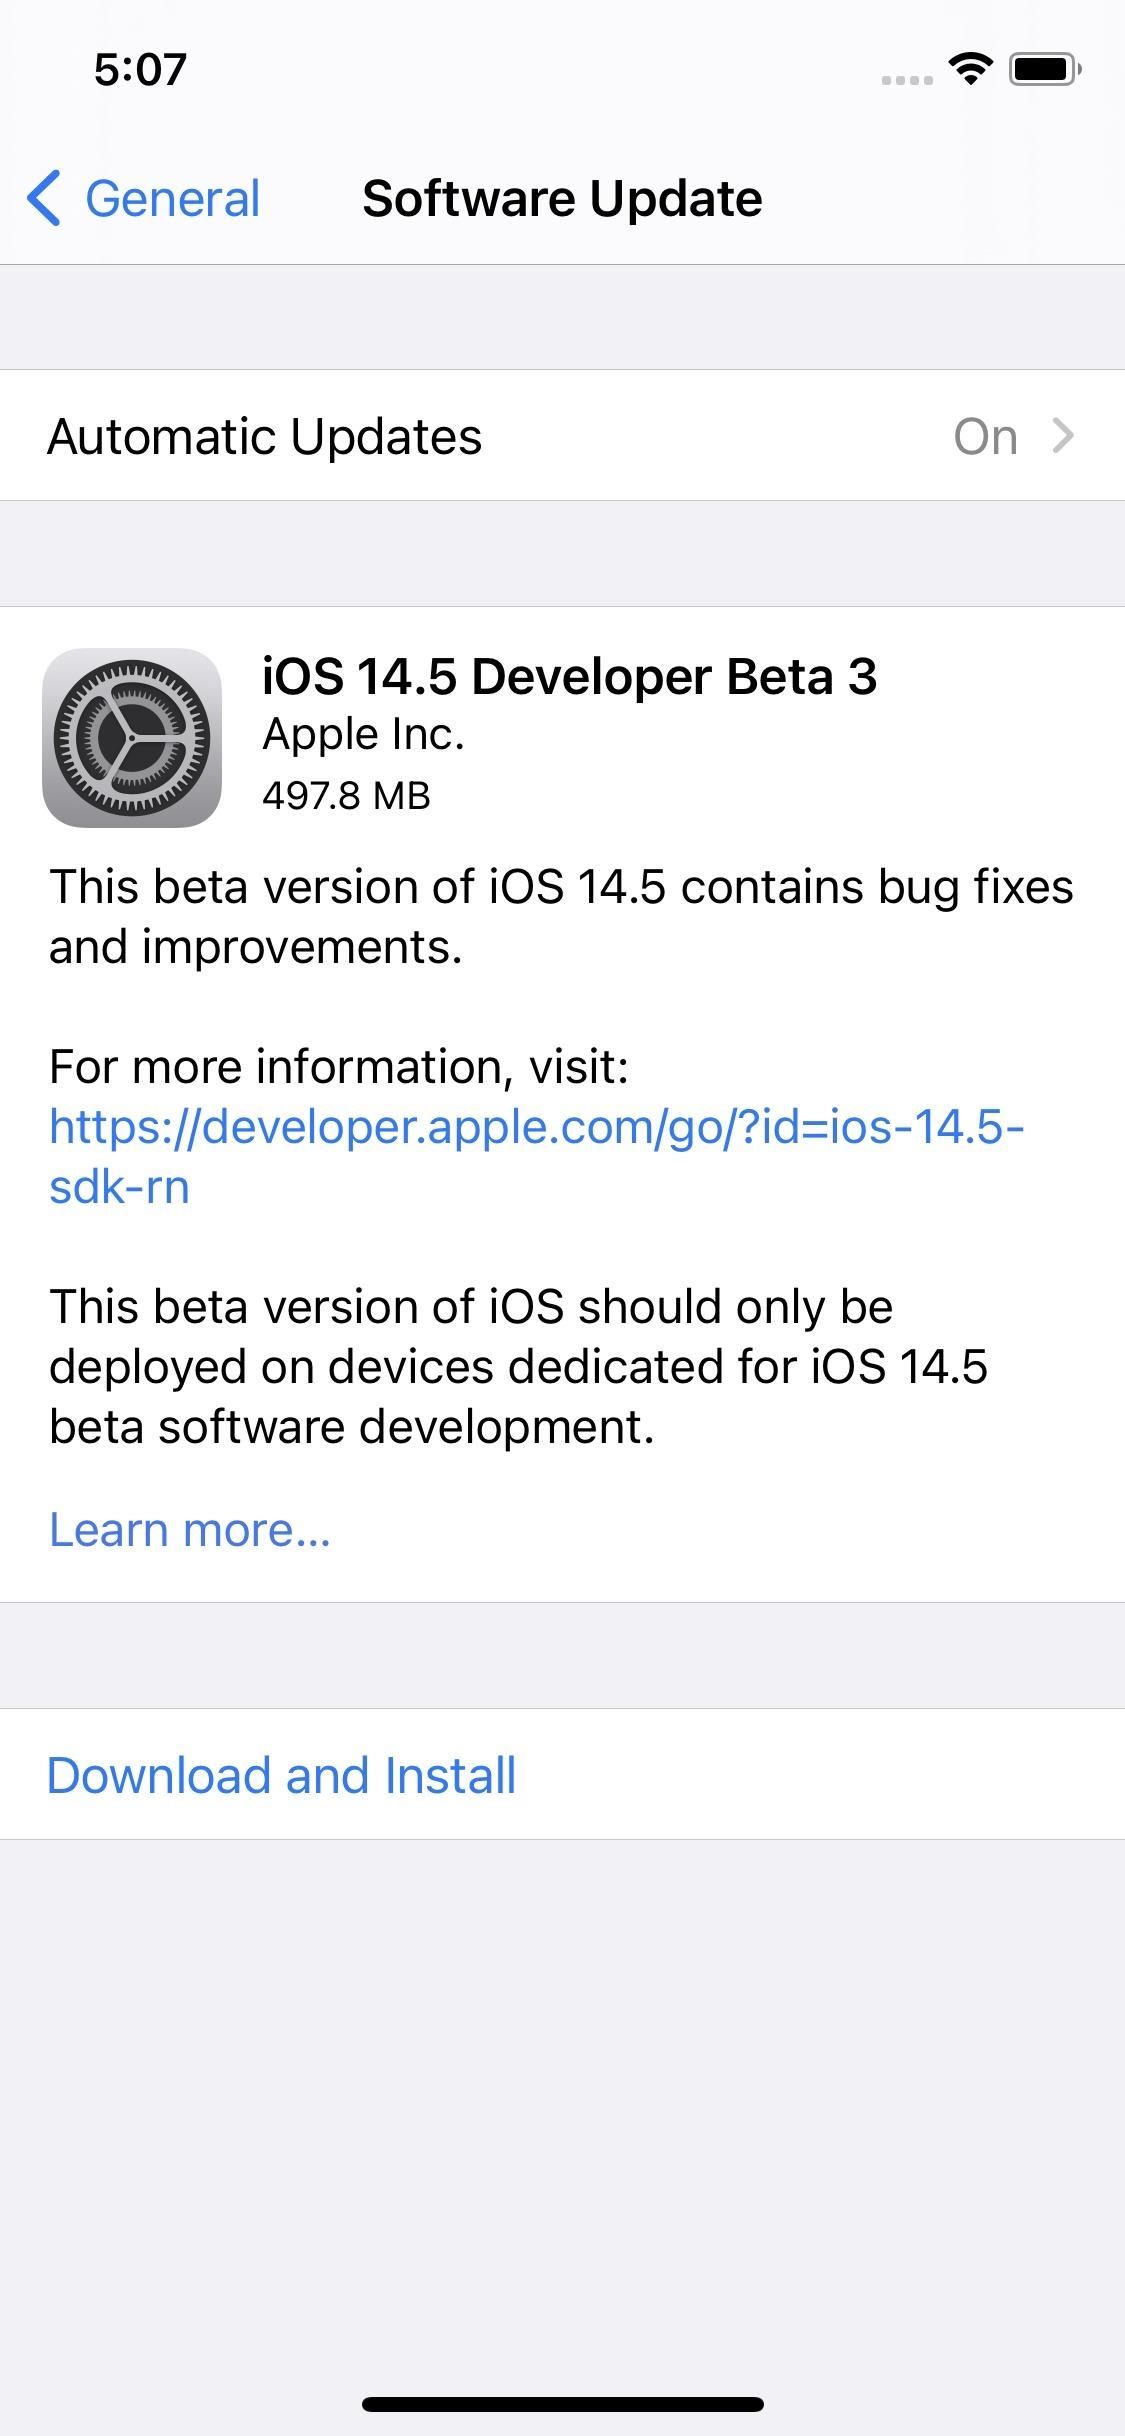 Apple Releases iOS 14.5 Developer Beta 3 for iPhone